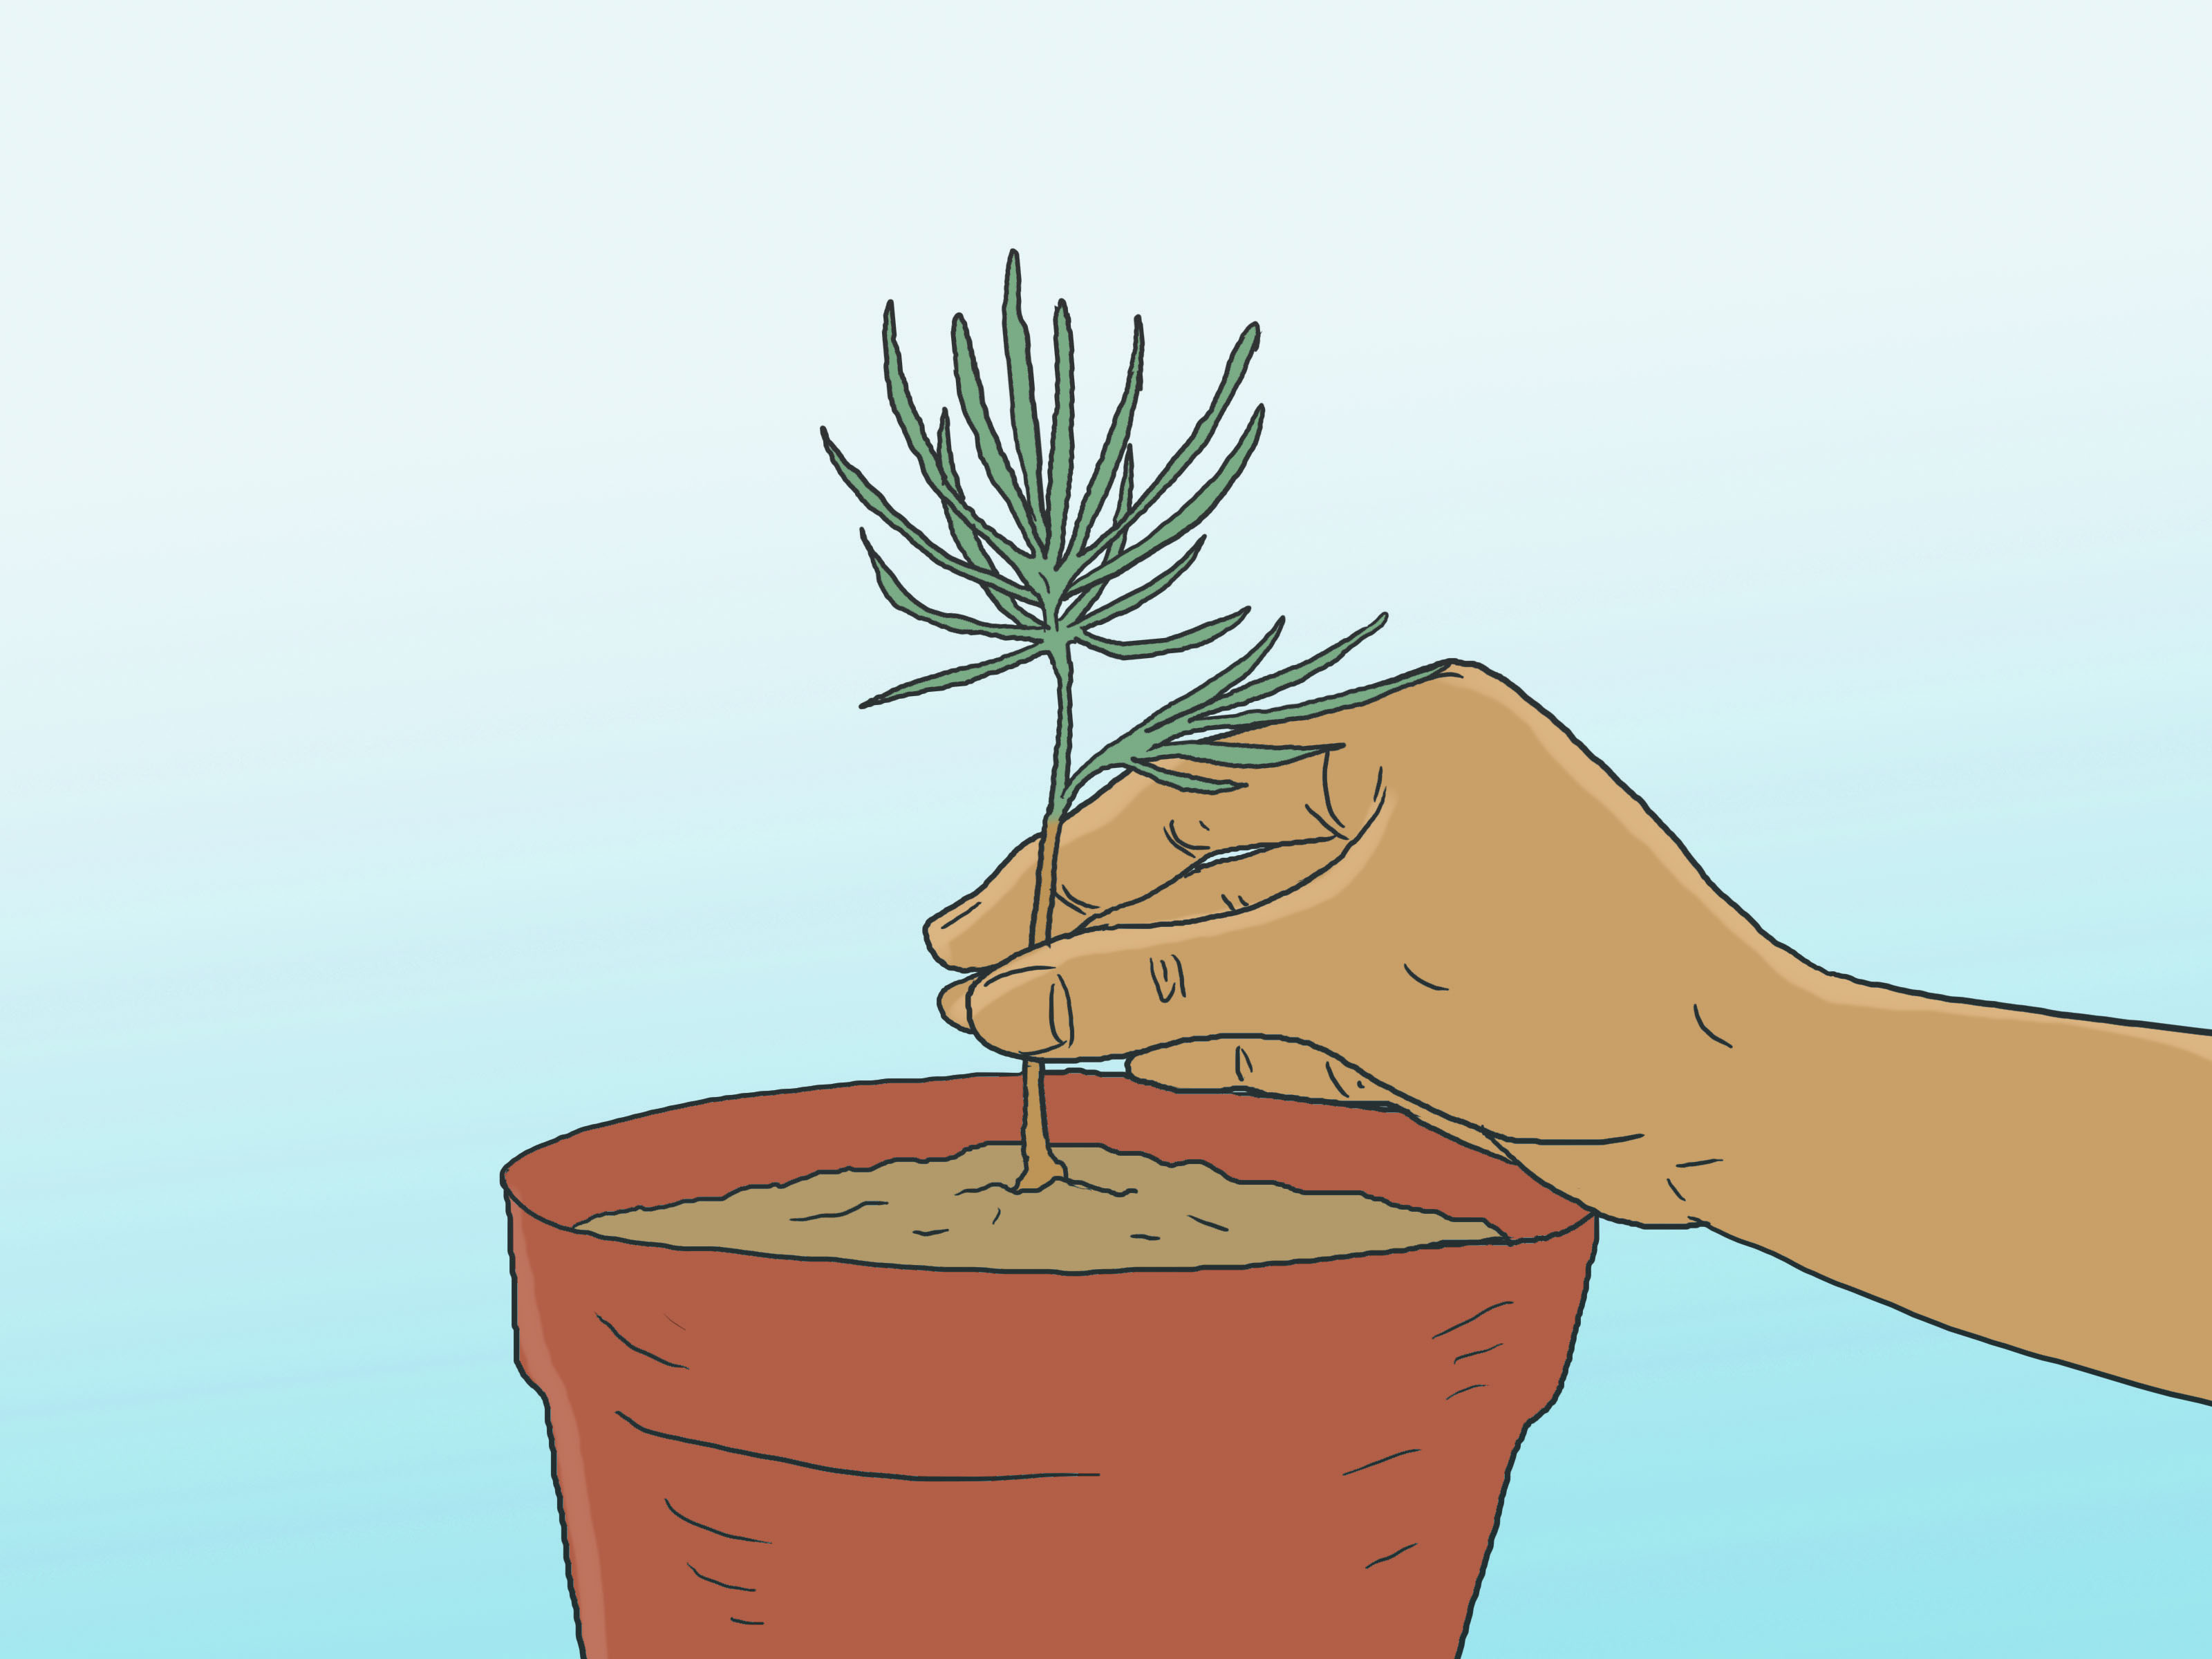 3 Ways to Grow Pine Trees - wikiHow